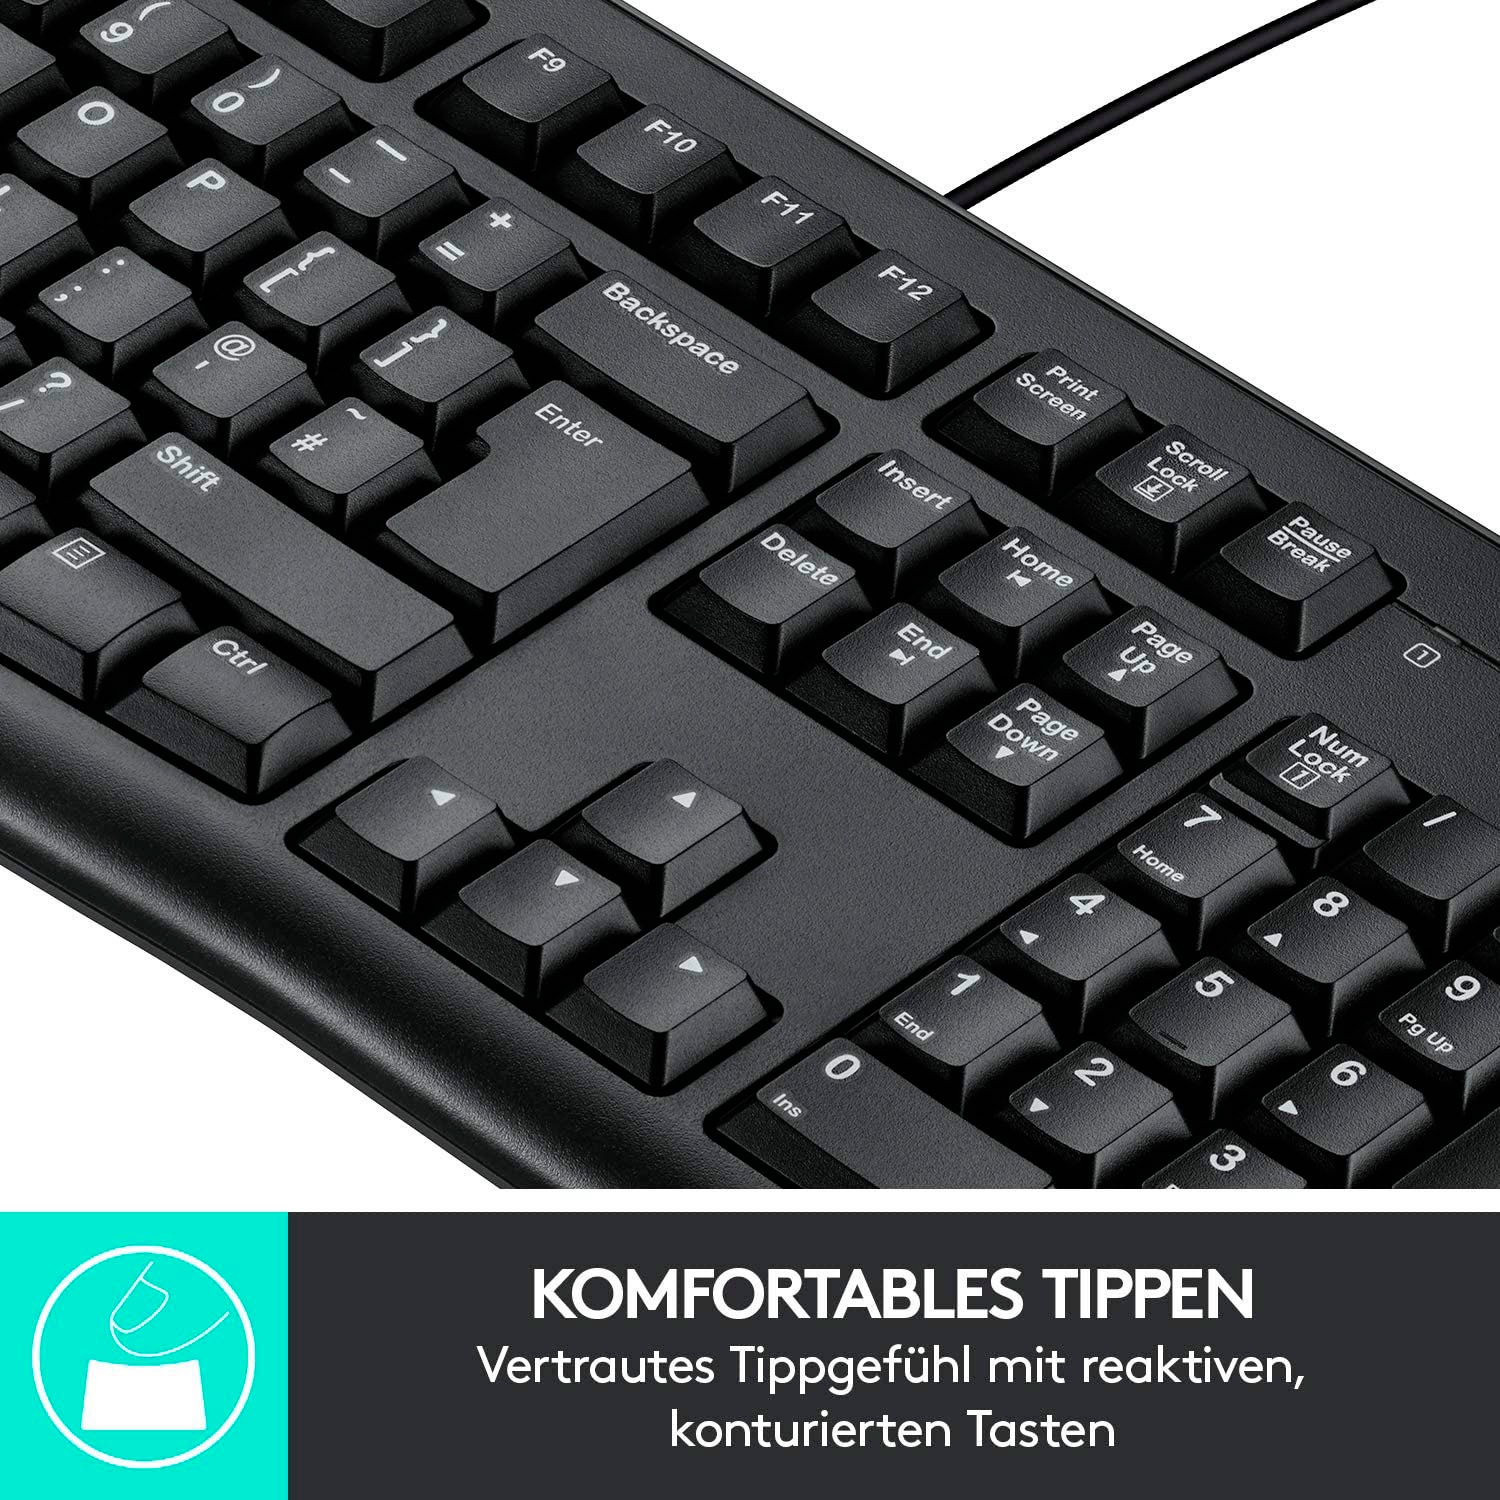 Logitech PC-Tastatur »Keyboard K120 - DE-Layout«, (Ziffernblock),  Nummernblock jetzt bestellen bei OTTO | Tastaturen